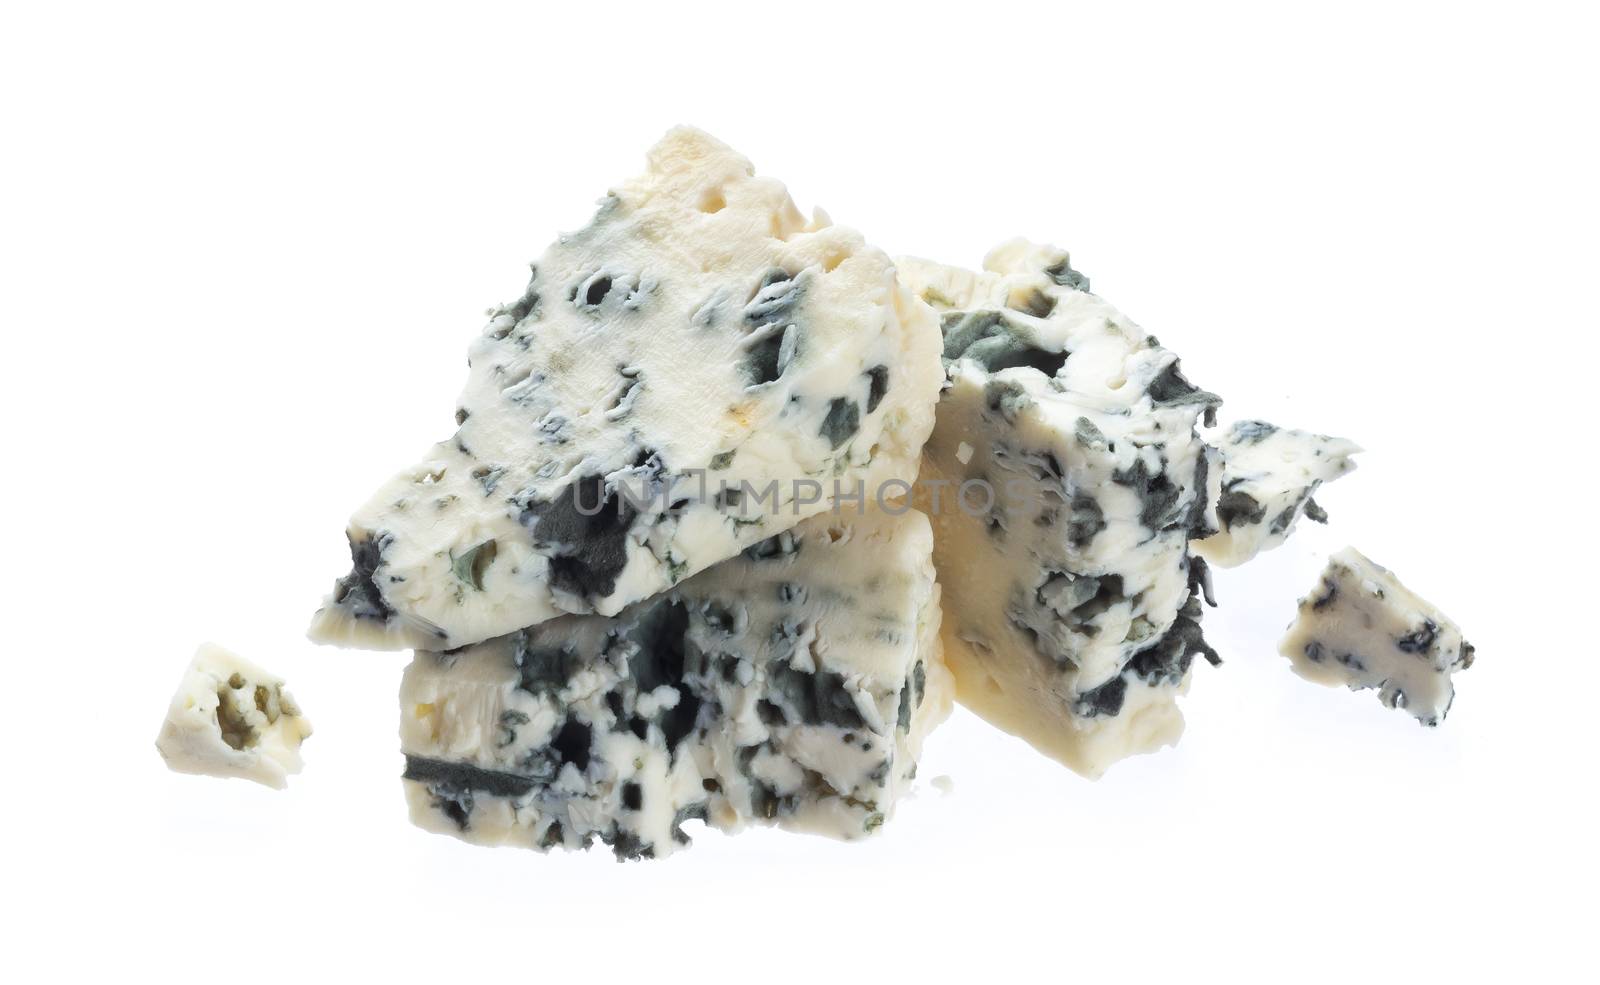 Danish blue cheese isolated on white background by xamtiw